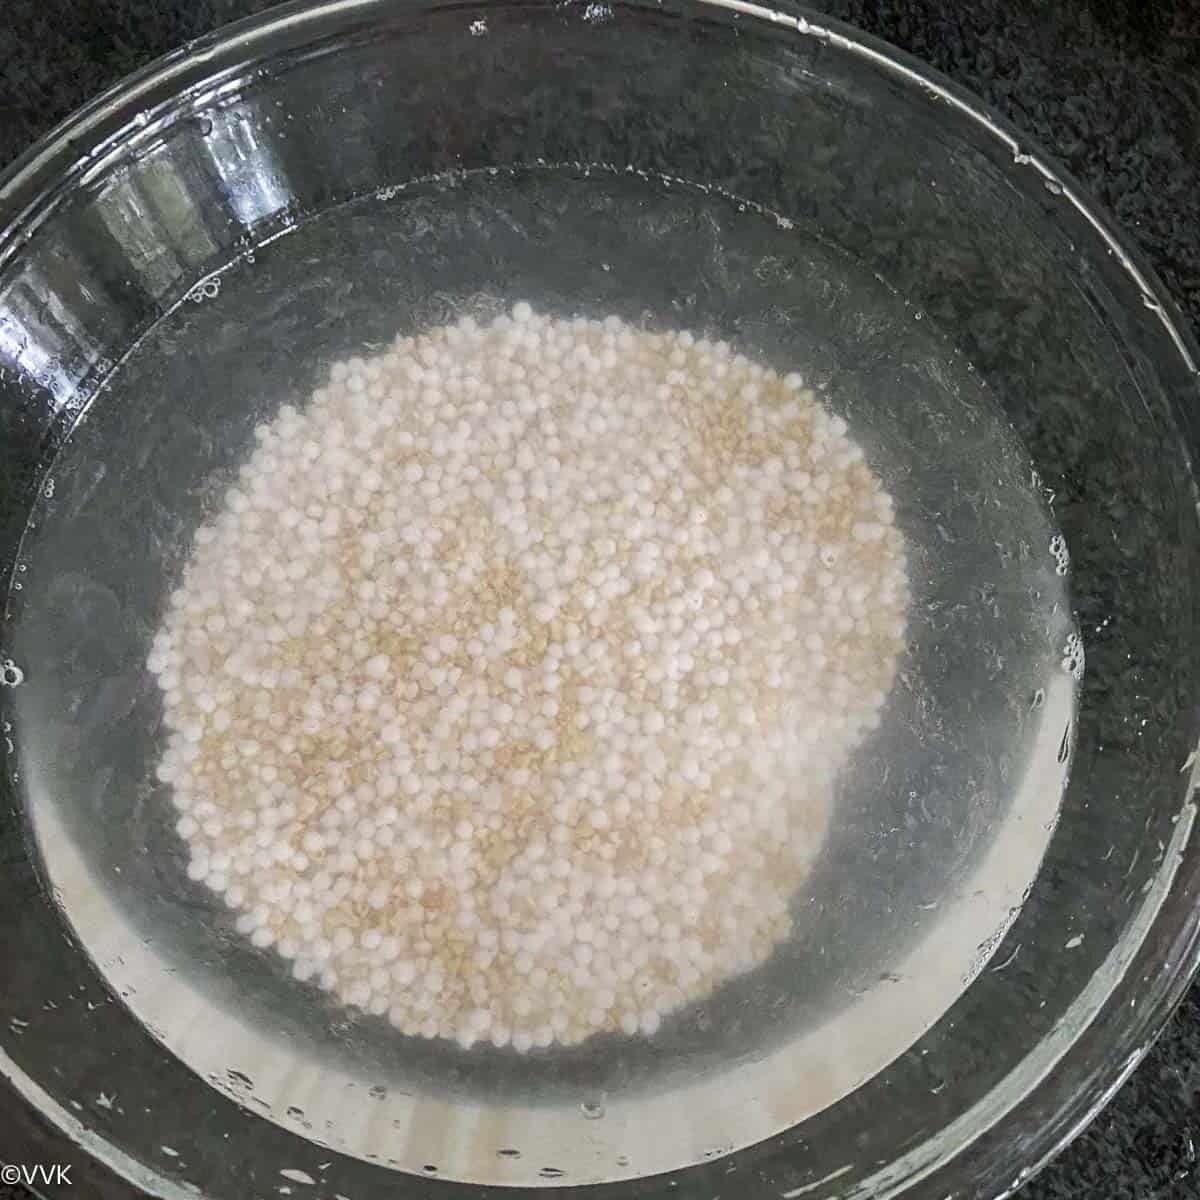 soaking buckwheat groats and sago pearls with fenugreek